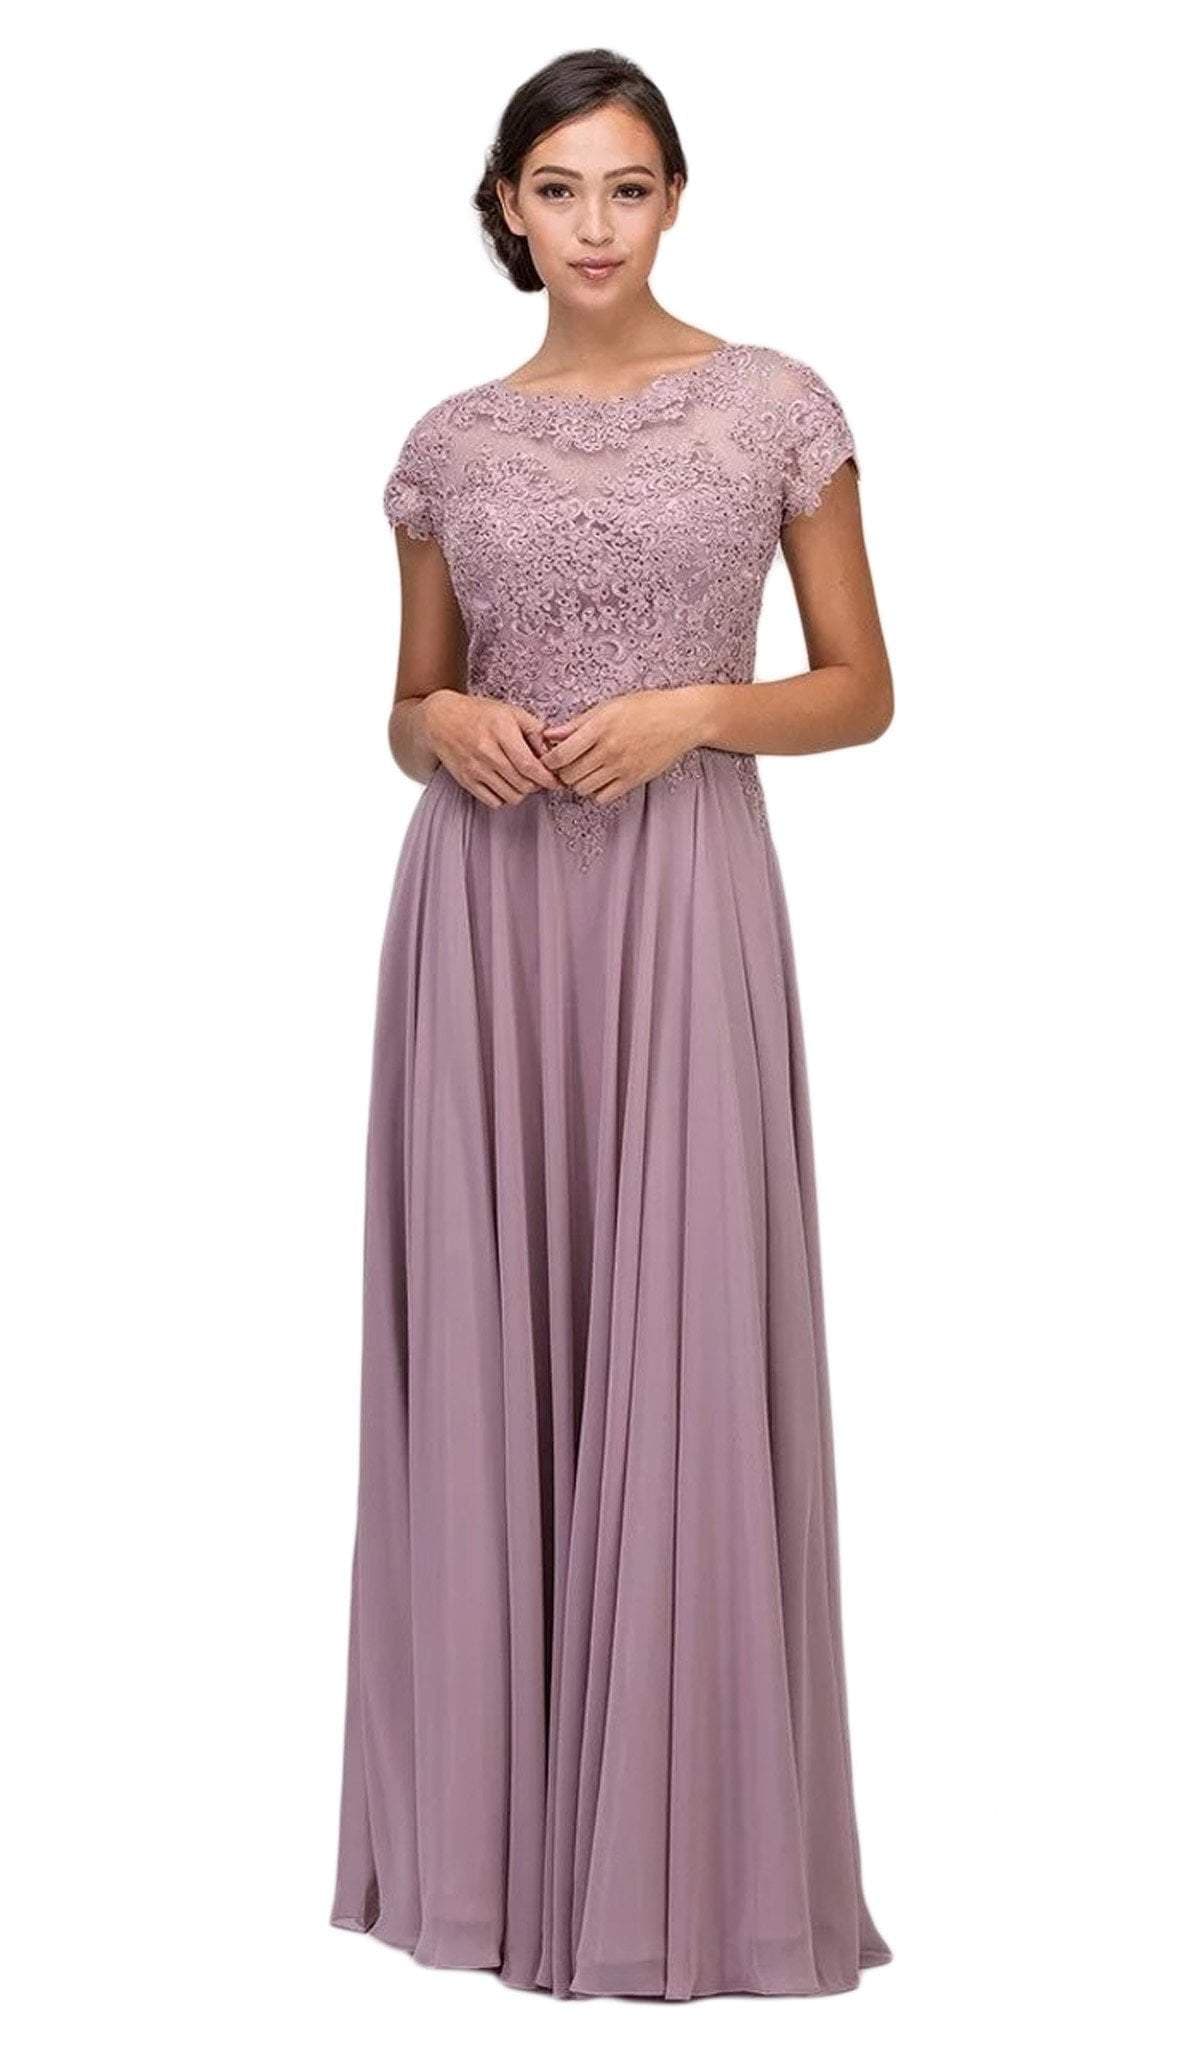 Eureka Fashion - 4909-4XL Illusion Short Sleeve Applique Chiffon Dress
